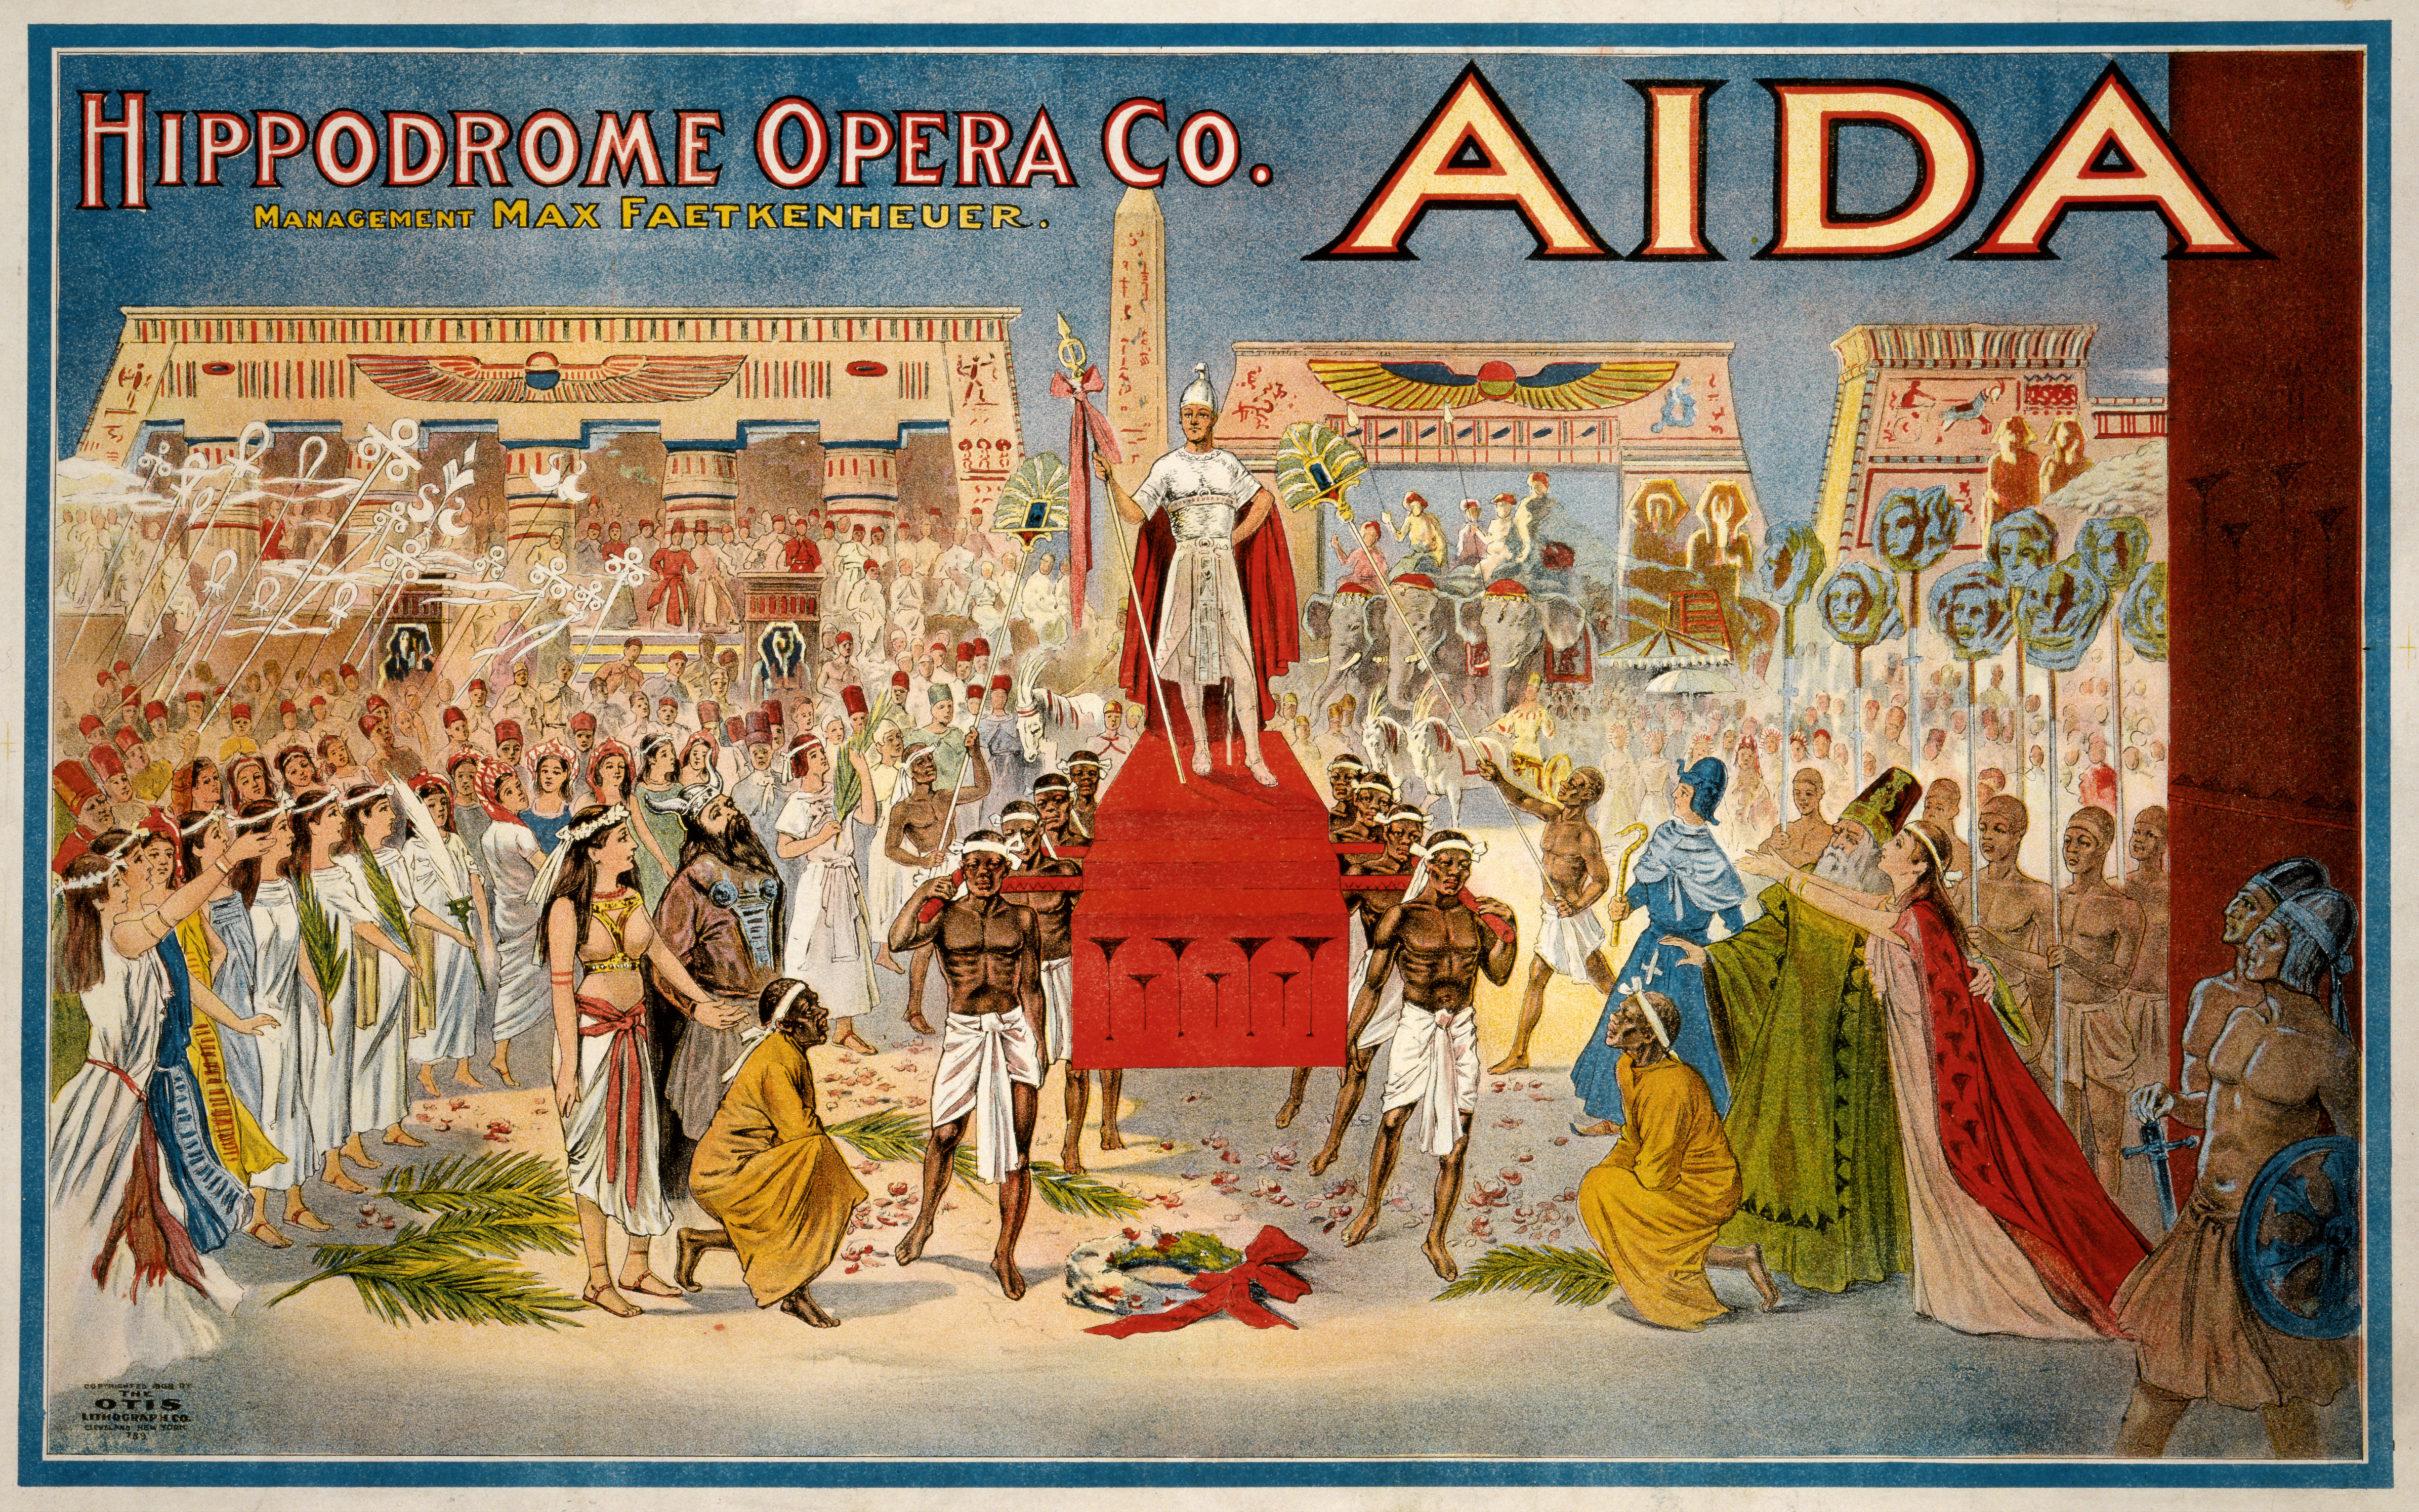 Aida poster colors fixed